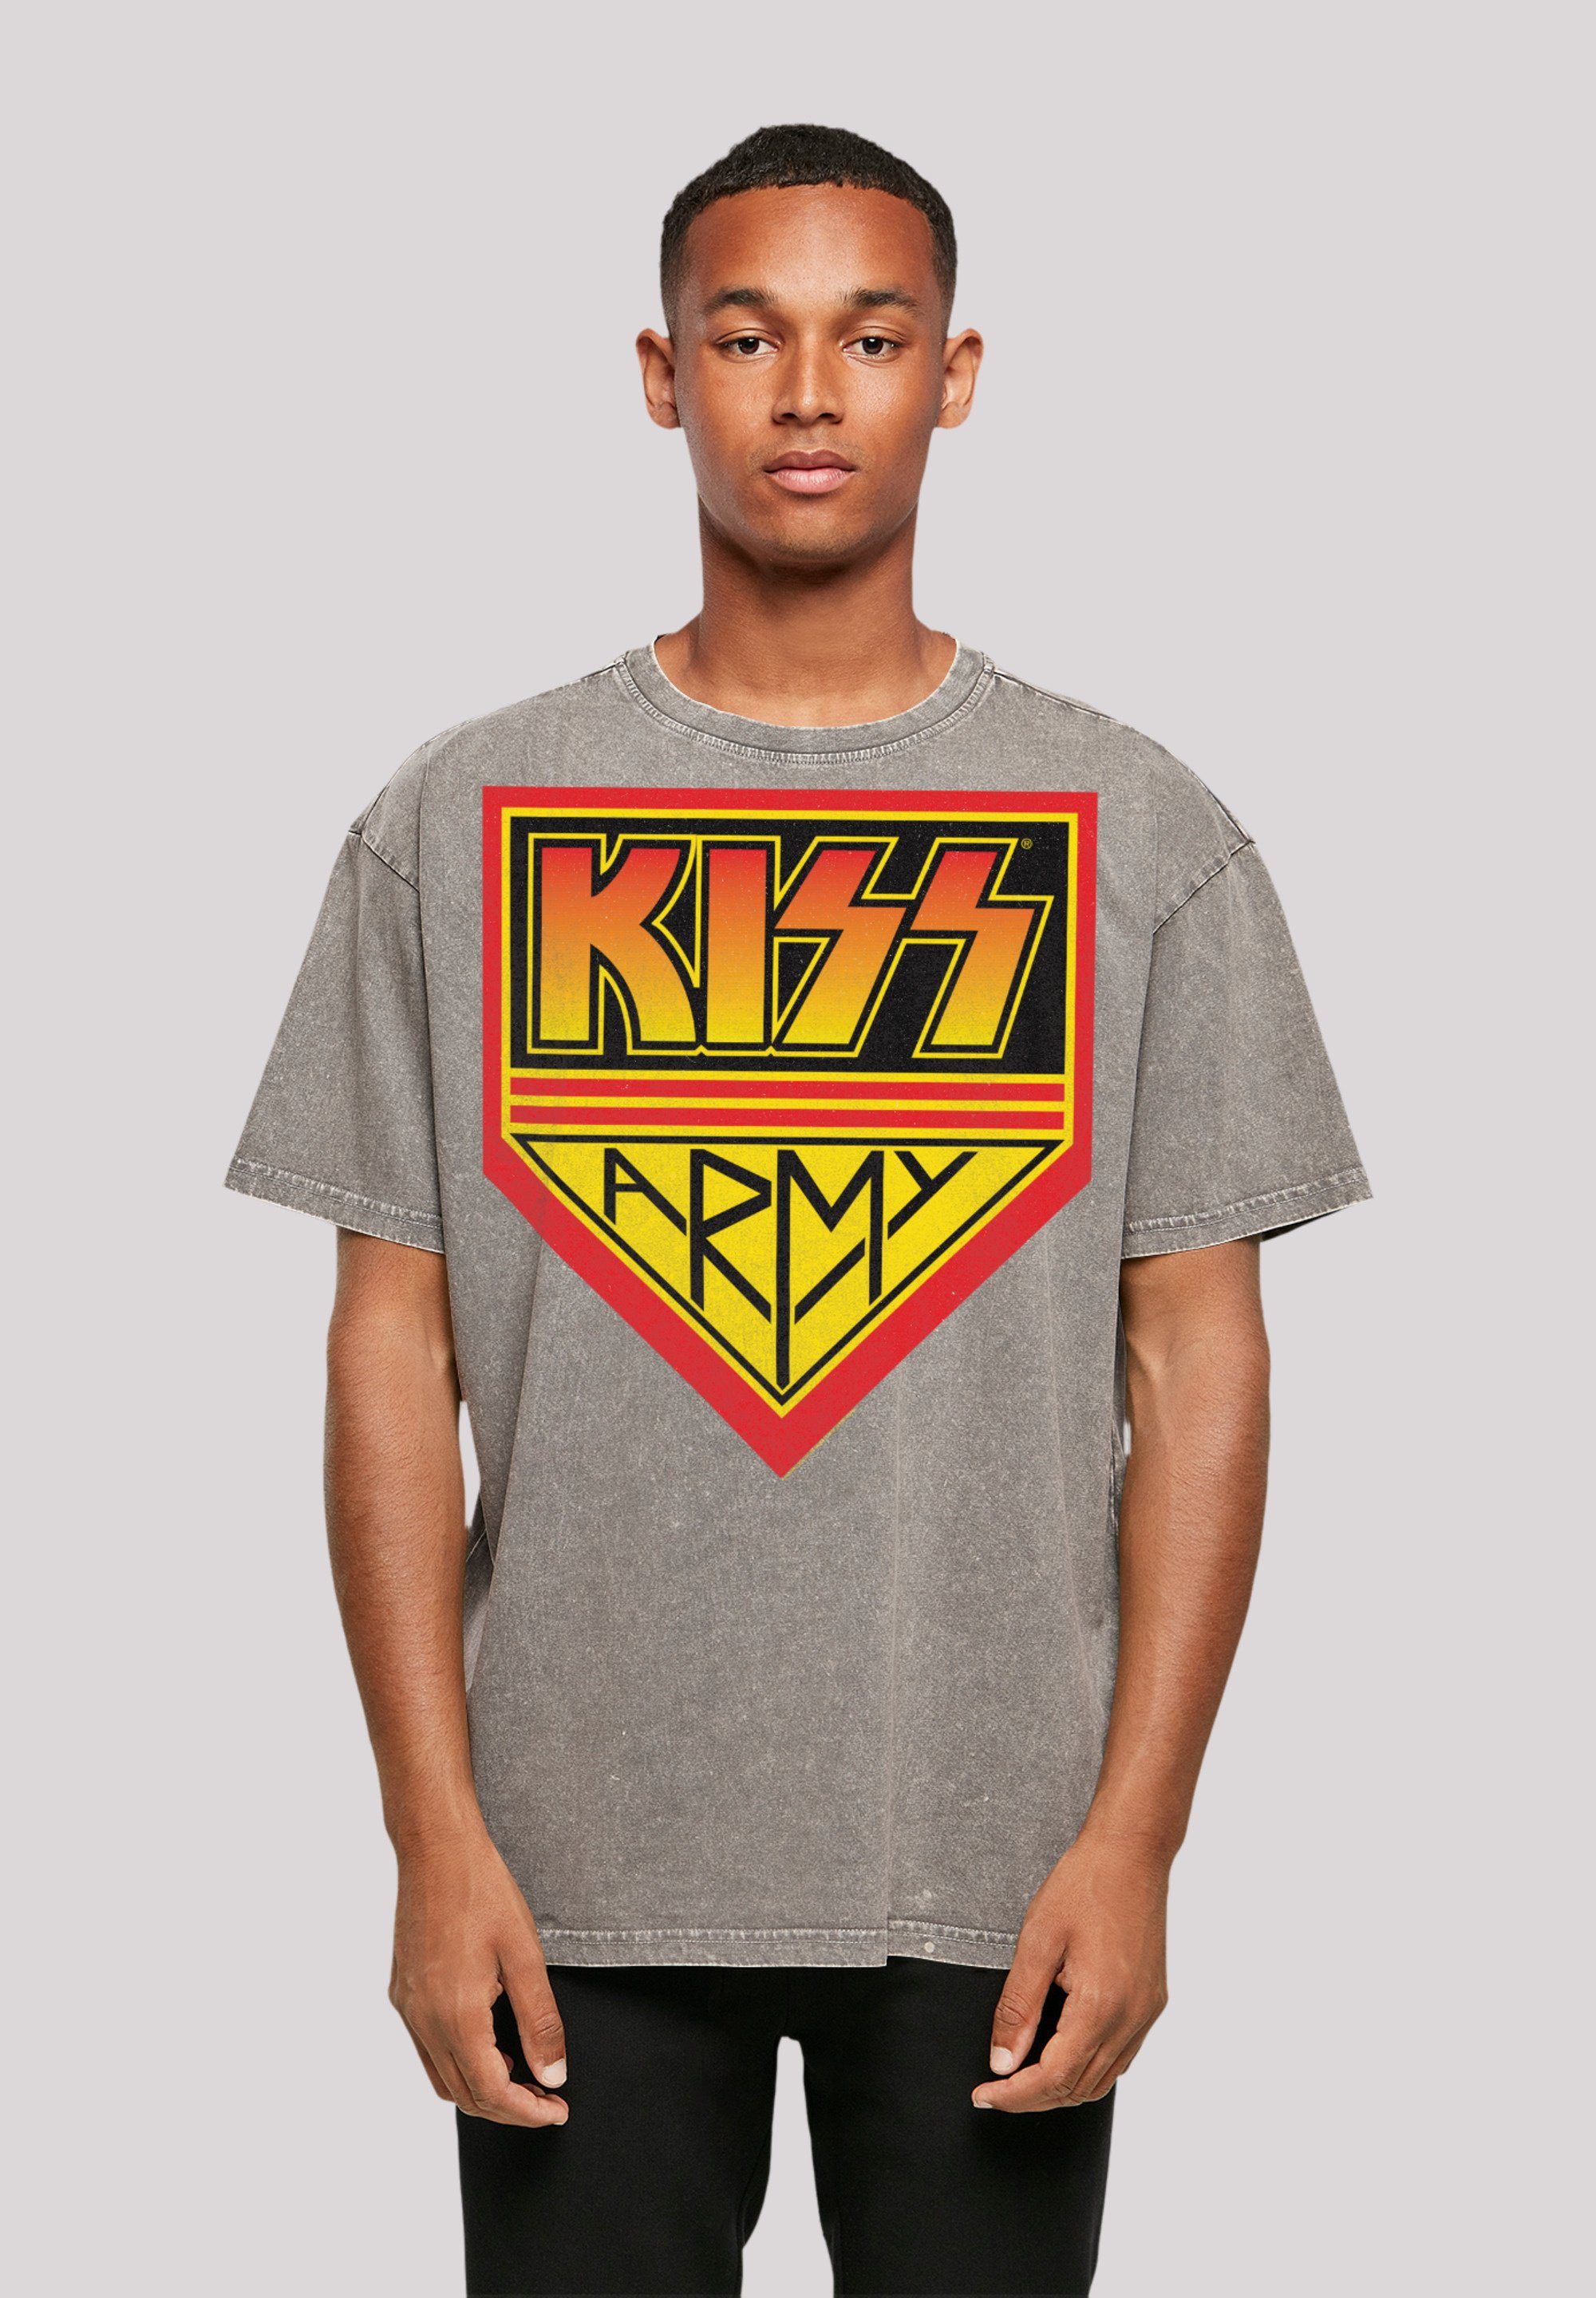 F4NT4STIC T-Shirt Kiss Rock Band Army Logo Premium Qualität, Musik, By Rock Off Asphalt